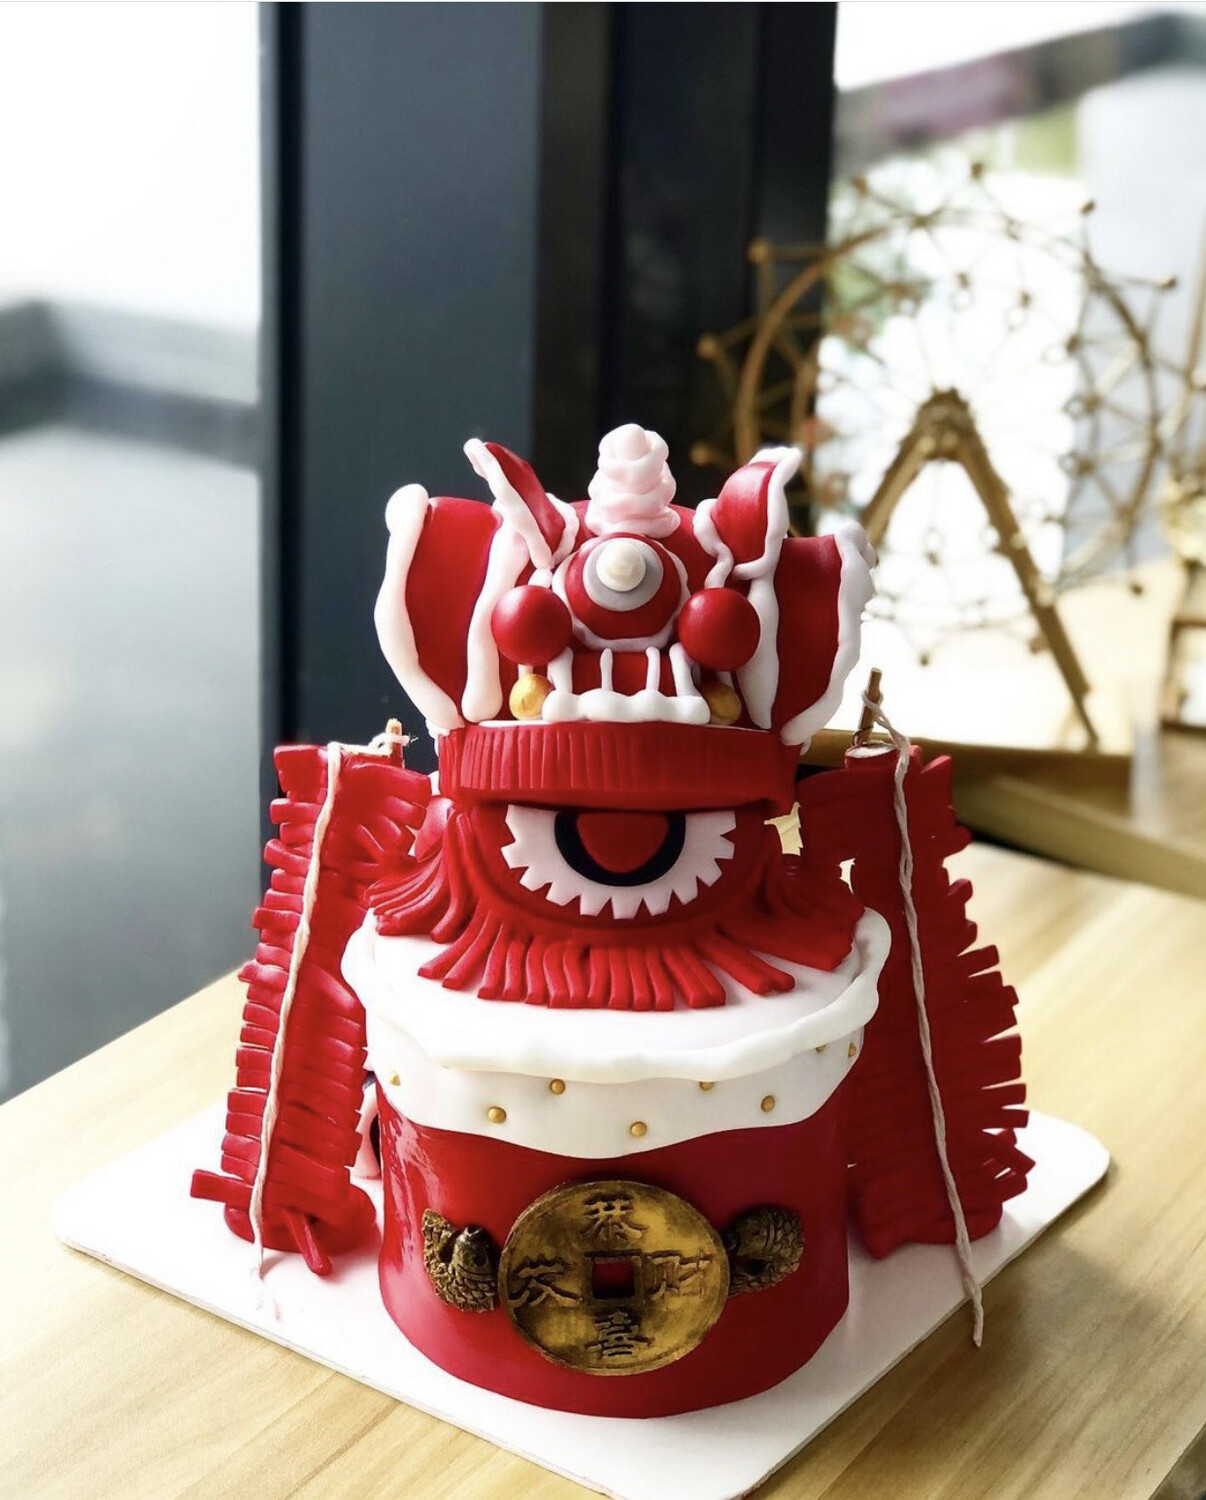 Festive - CNY - Lion Dance Cake 2